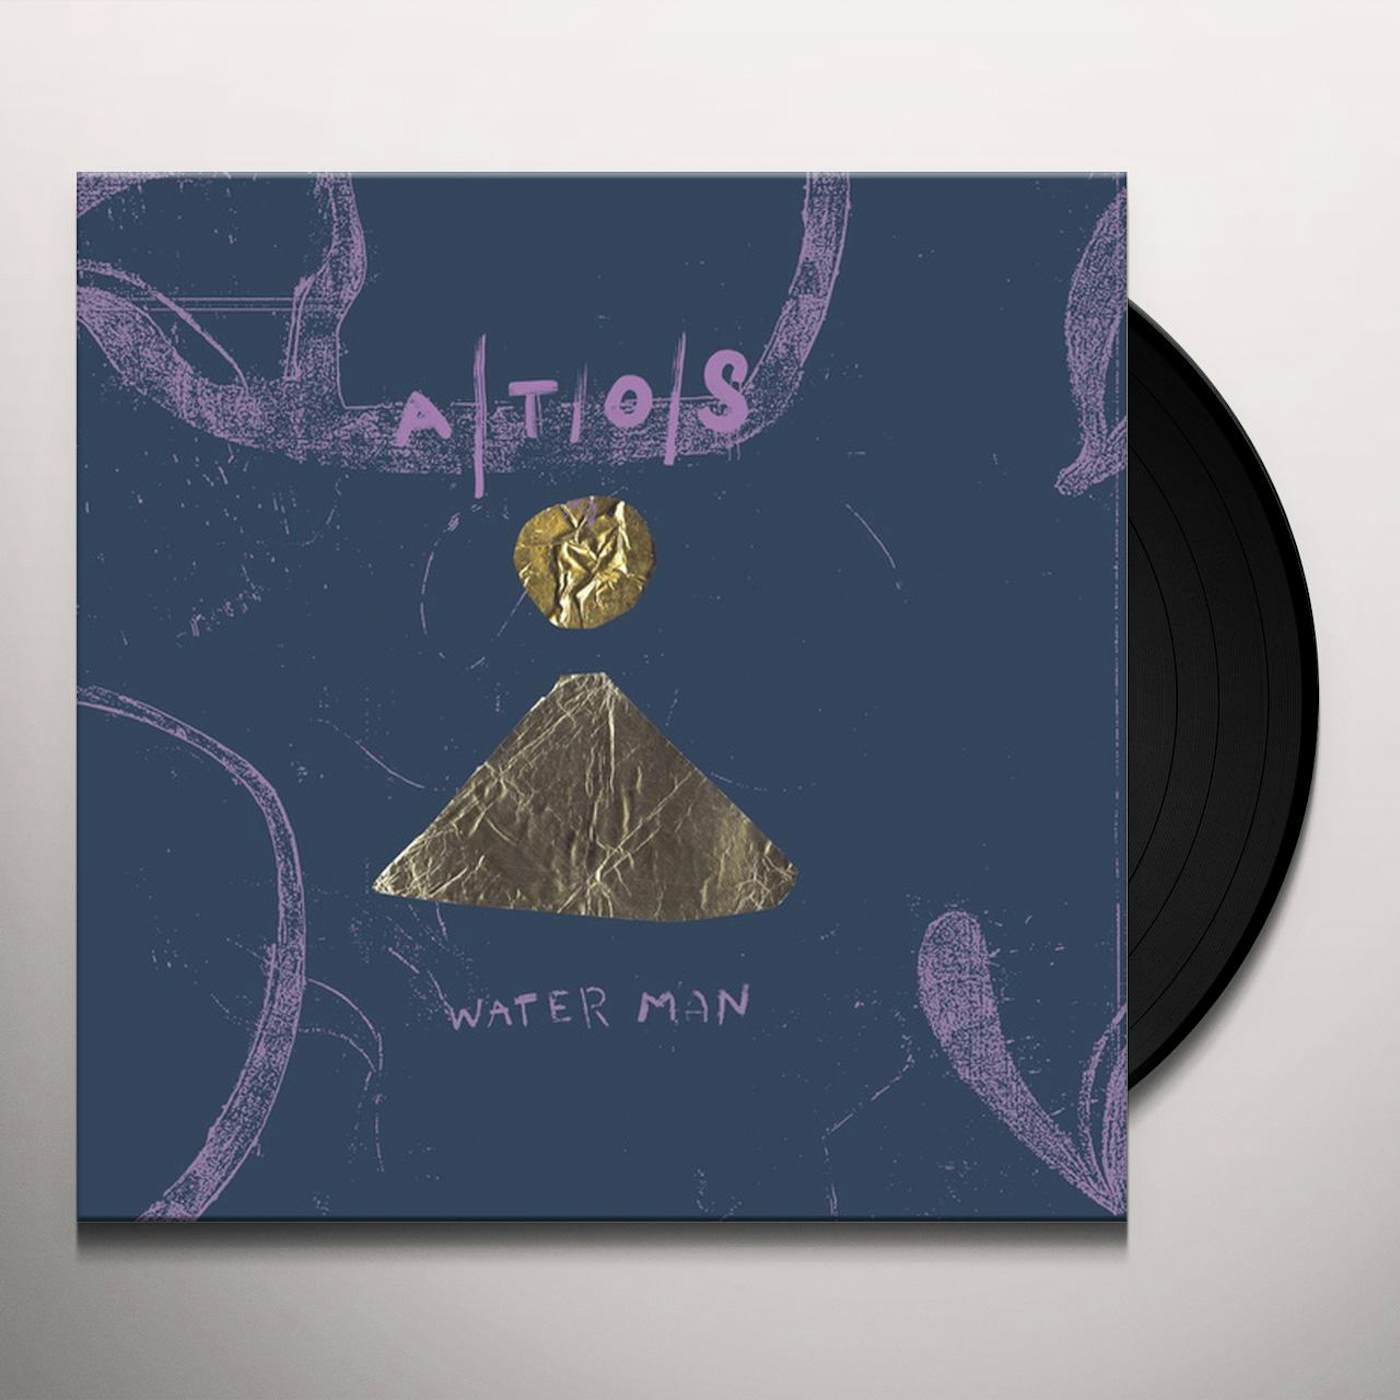 A/T/O/S waterman Vinyl Record